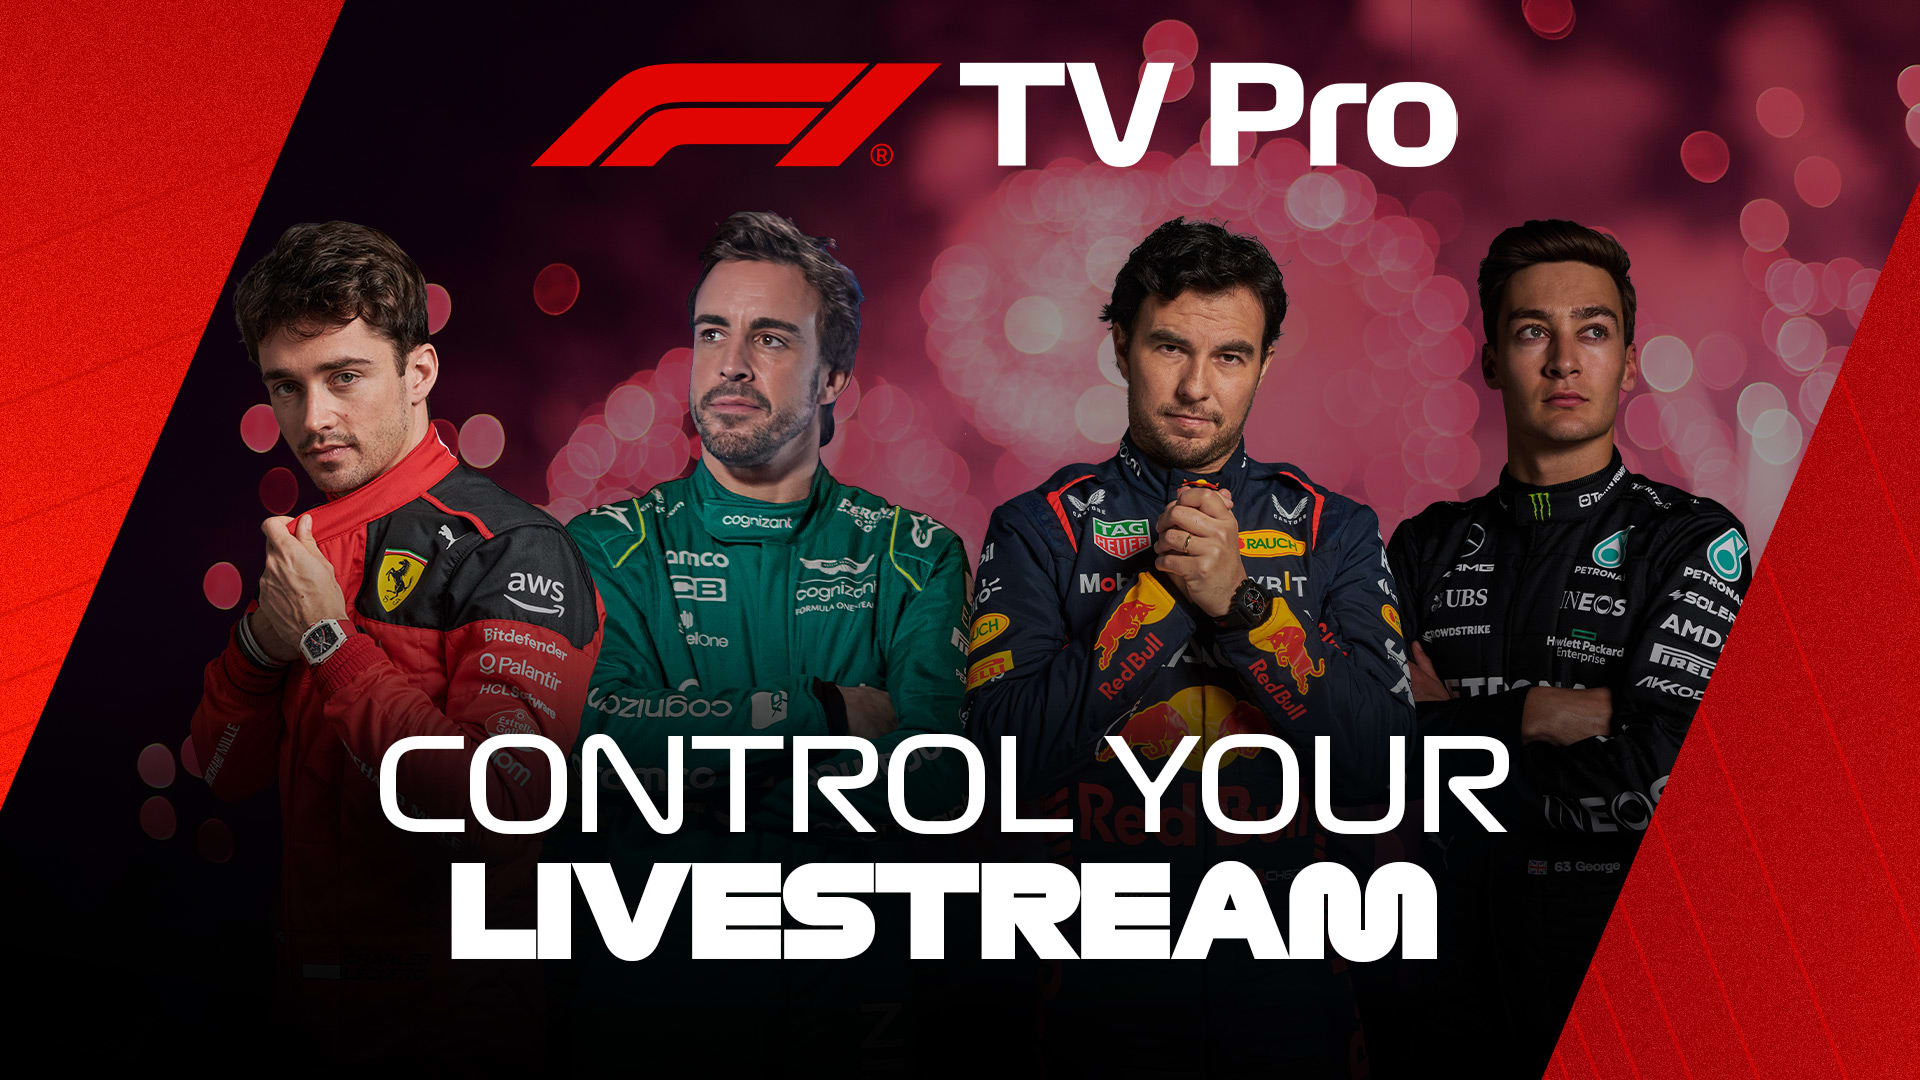 How to stream the 2023 Belgian Grand Prix on F1 TV Pro Formula 1®